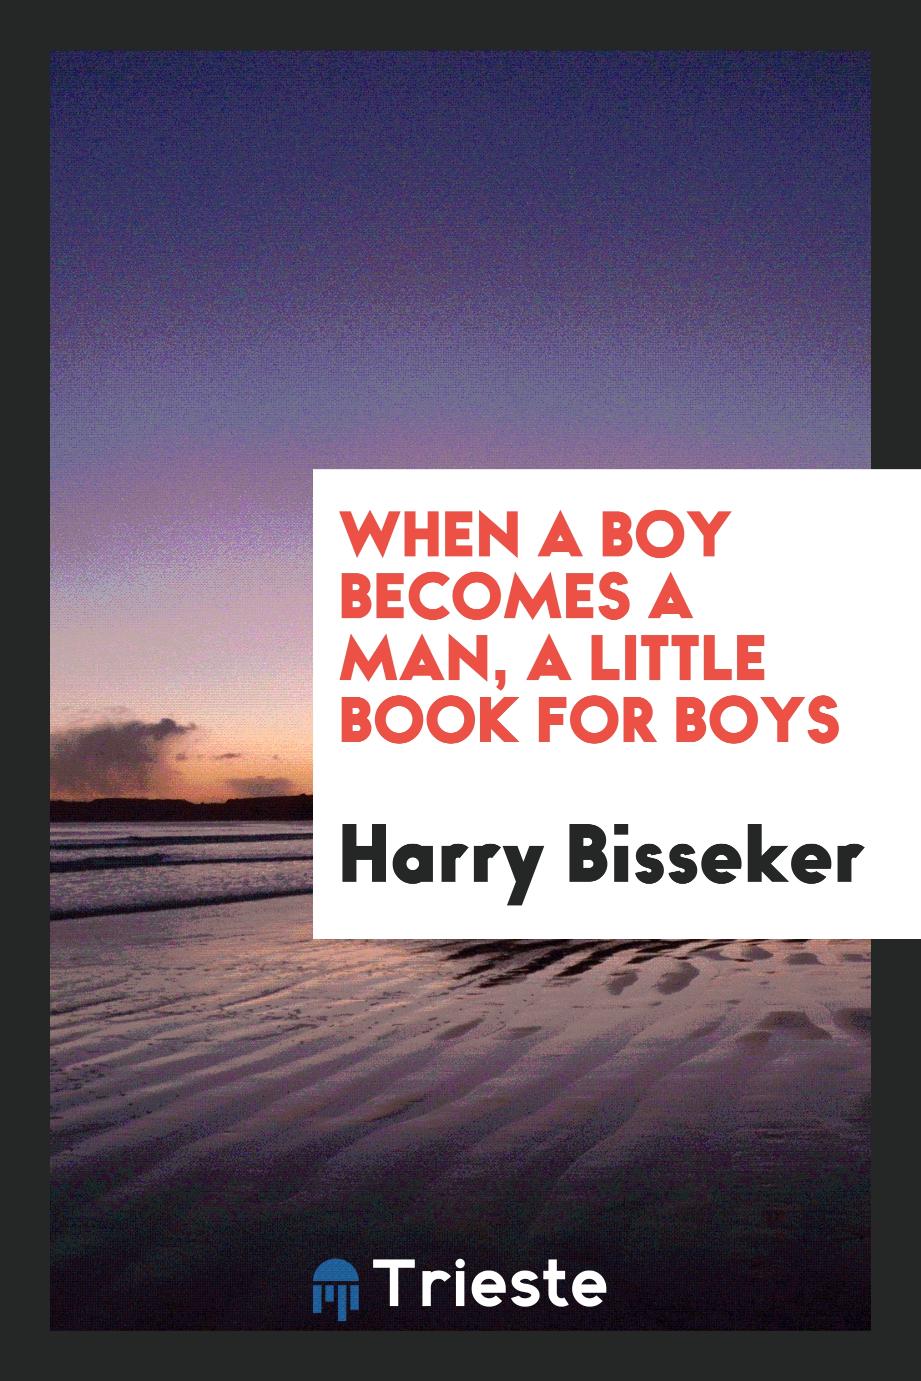 When a boy becomes a man, a little book for boys